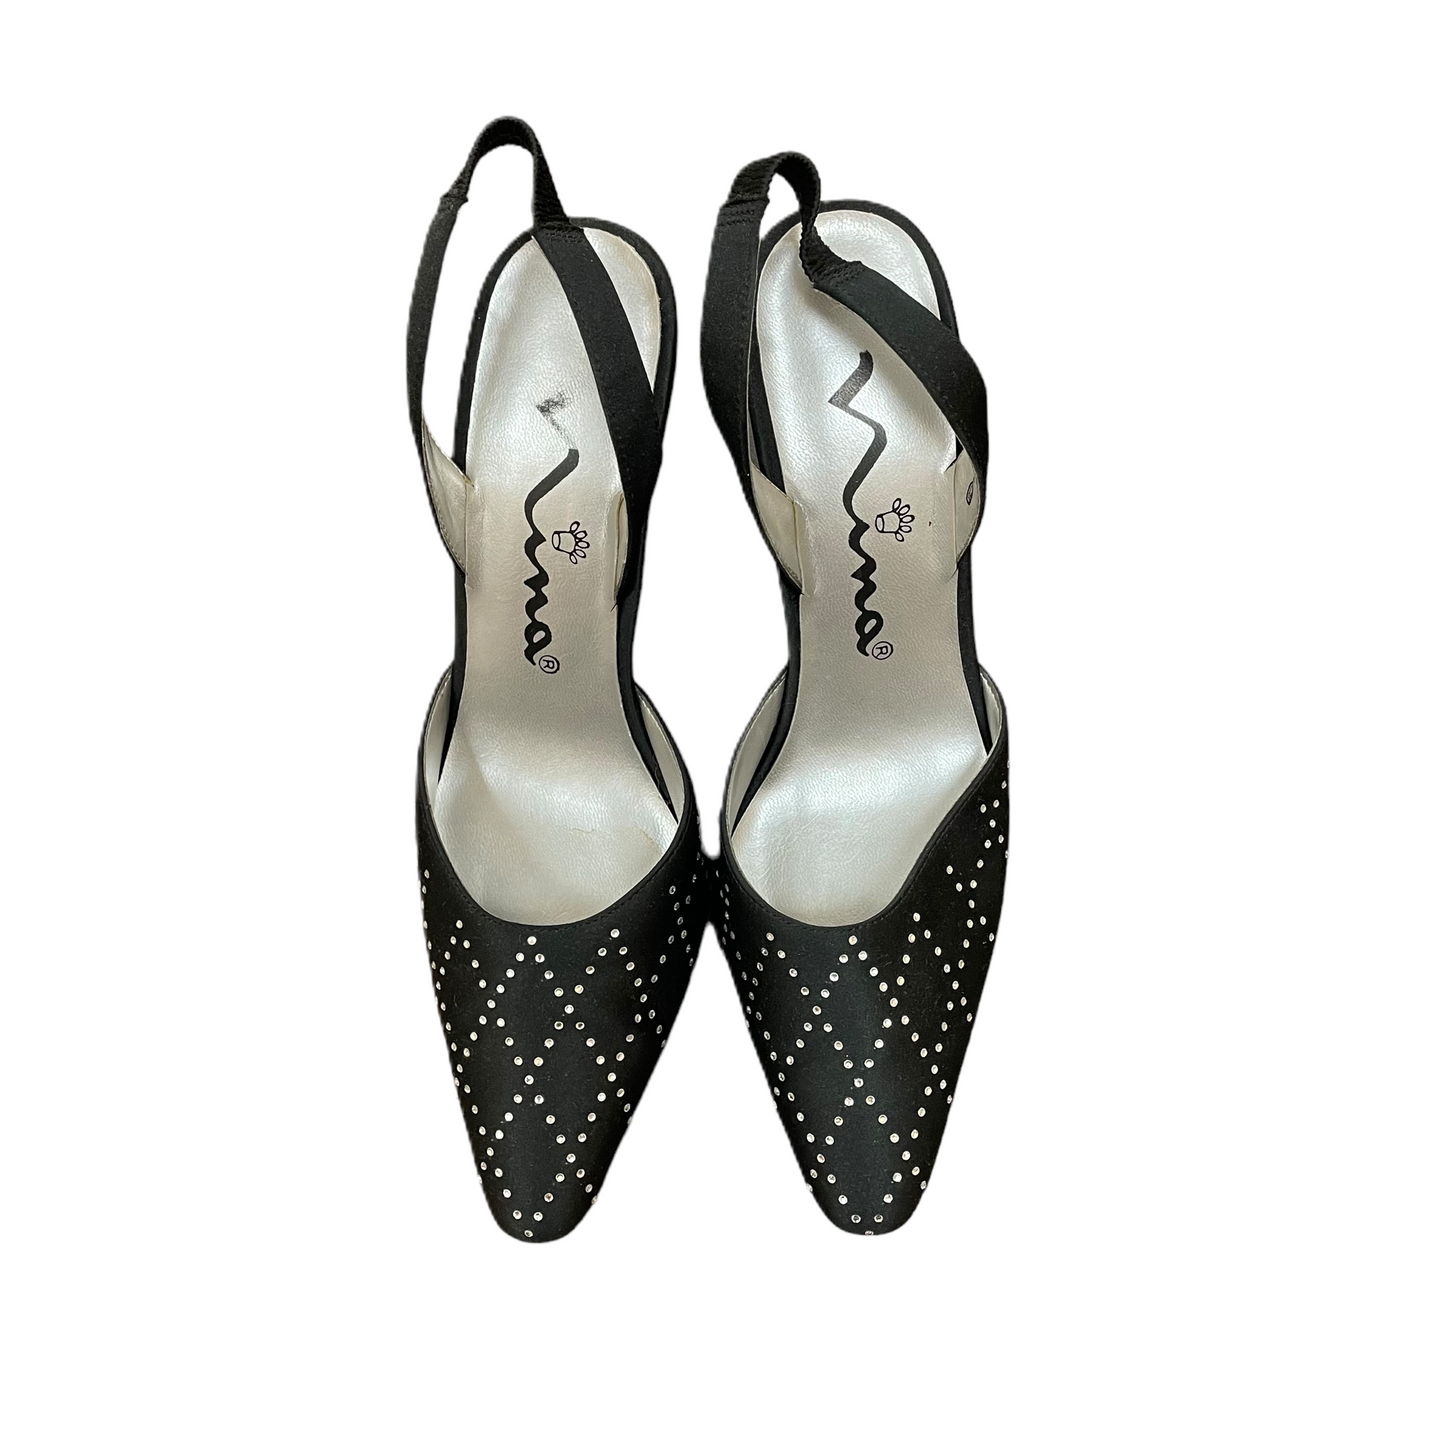 Black Shoes Heels Stiletto By Nina, Size: 6